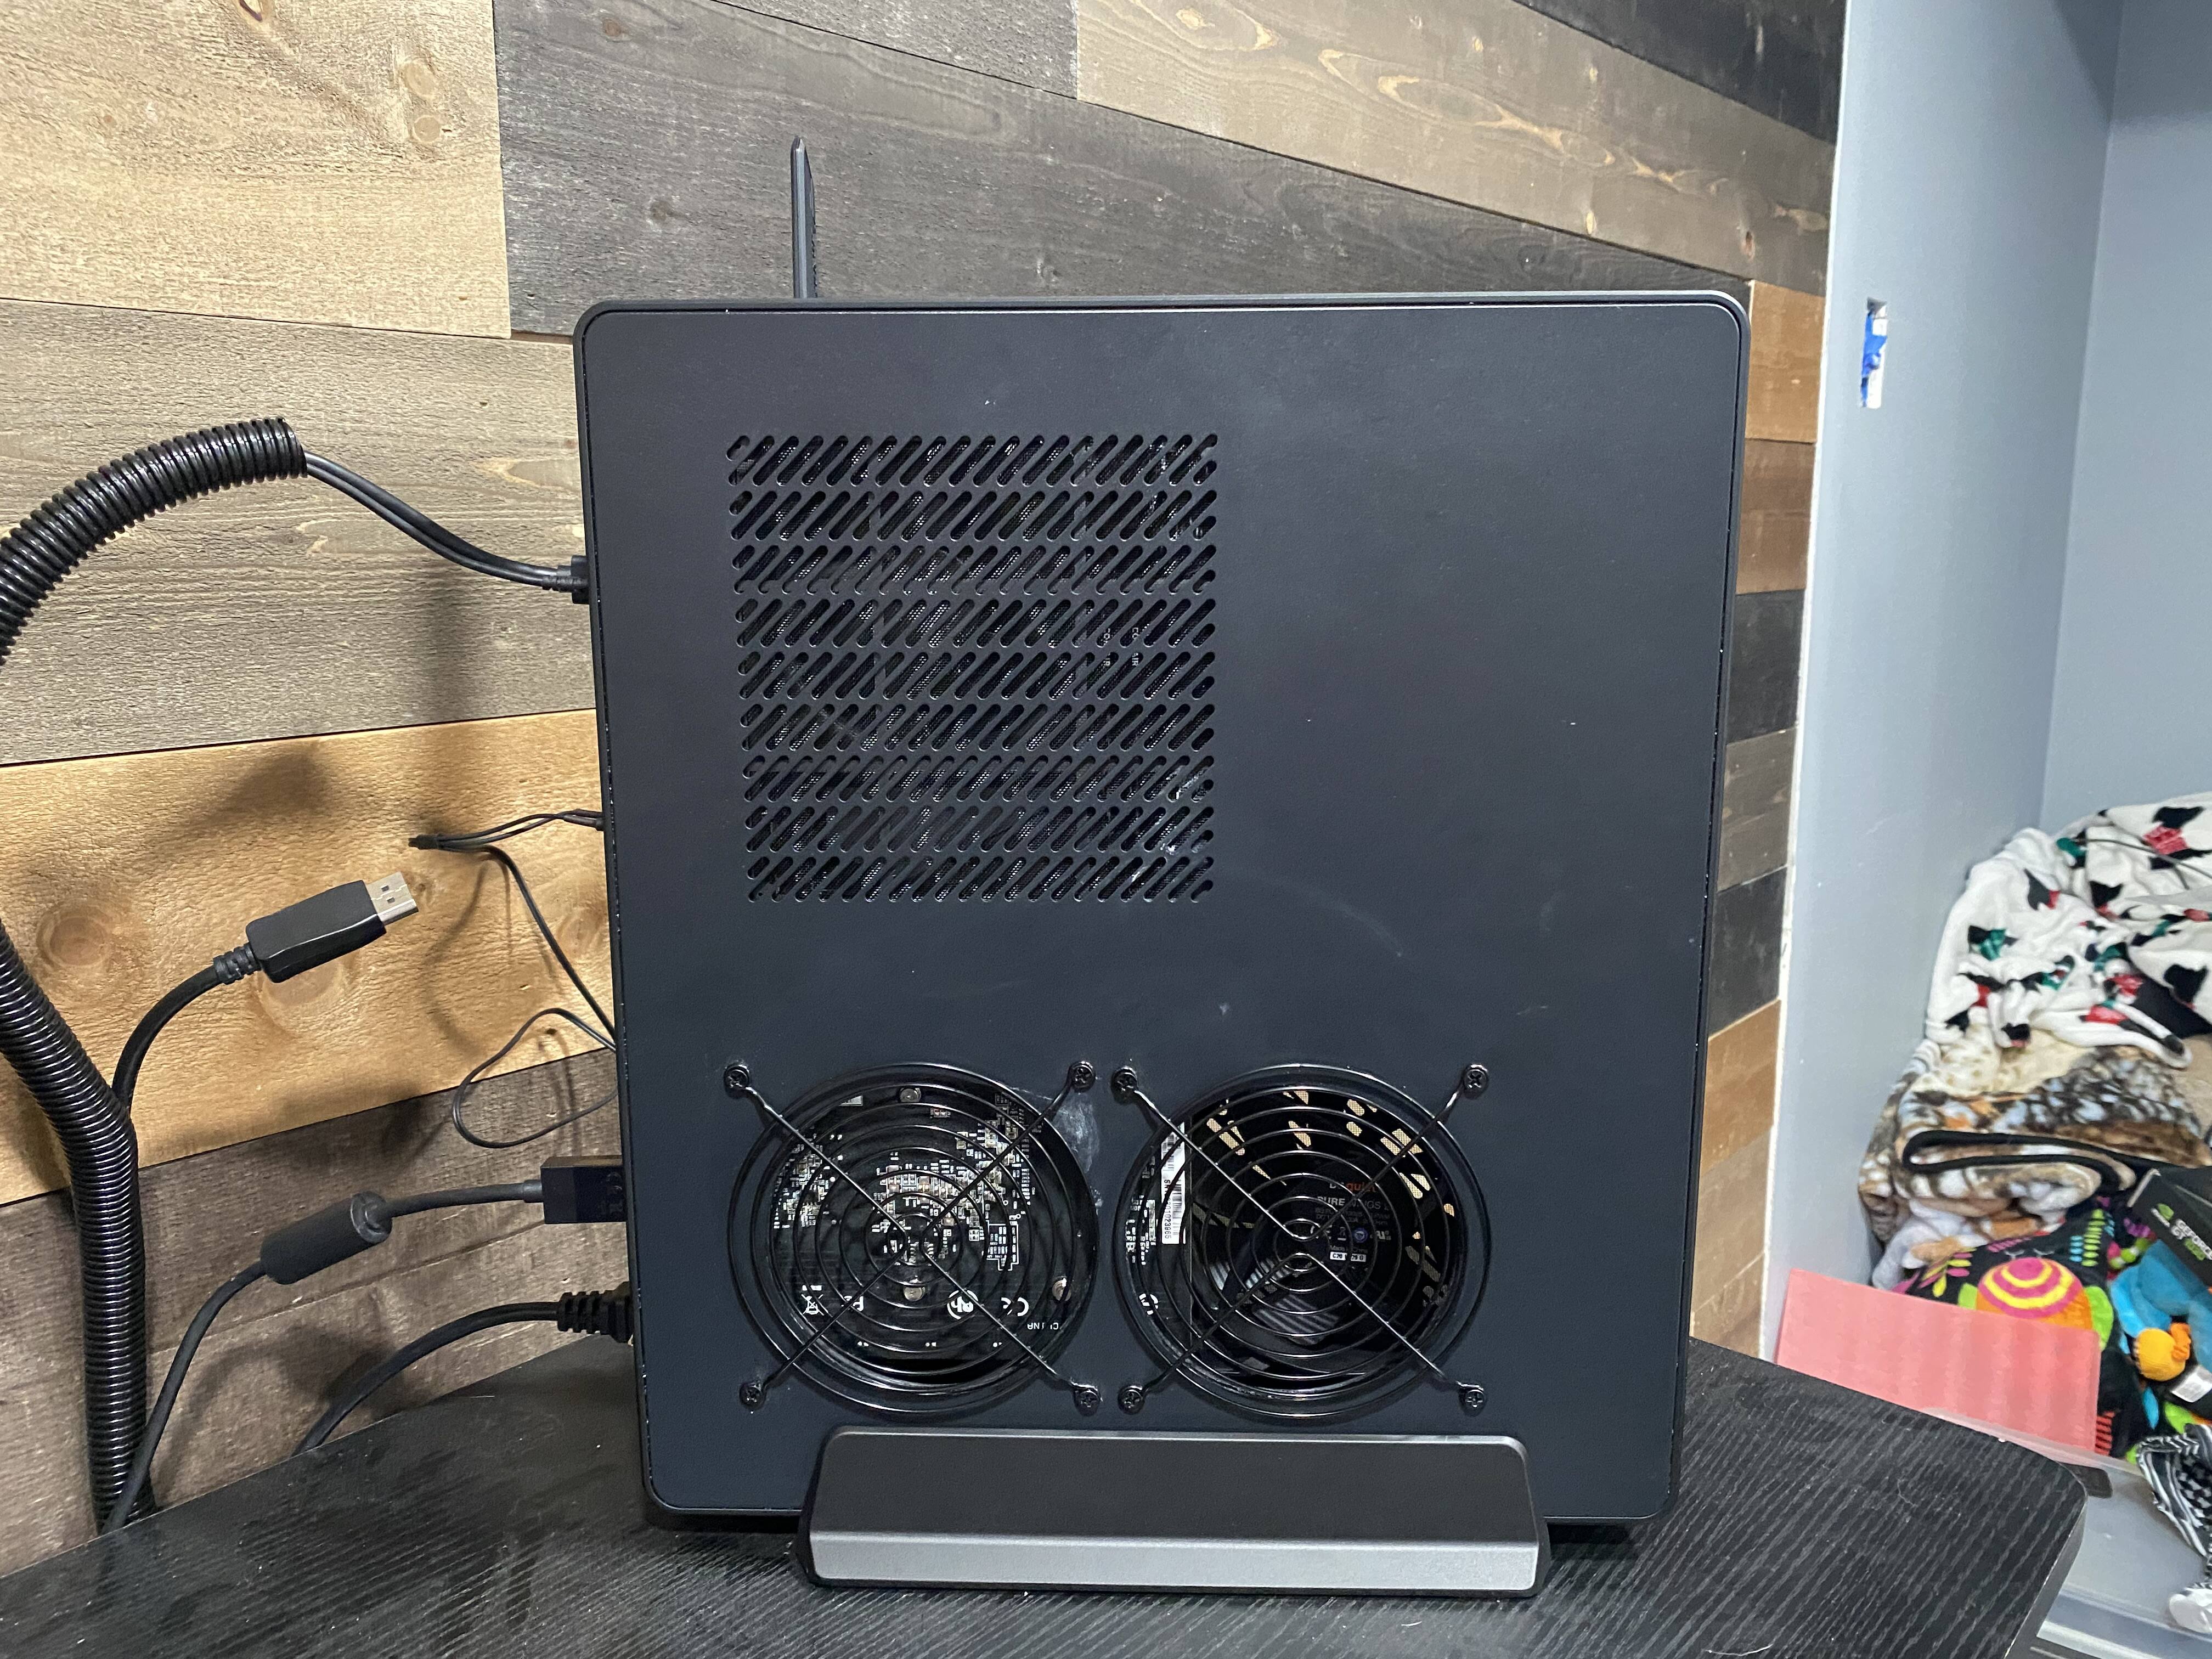 AIO CPU Cooler in Fractal Design Node 202... Using Fans for Ventilation. - Cooling - Linus Tech Tips